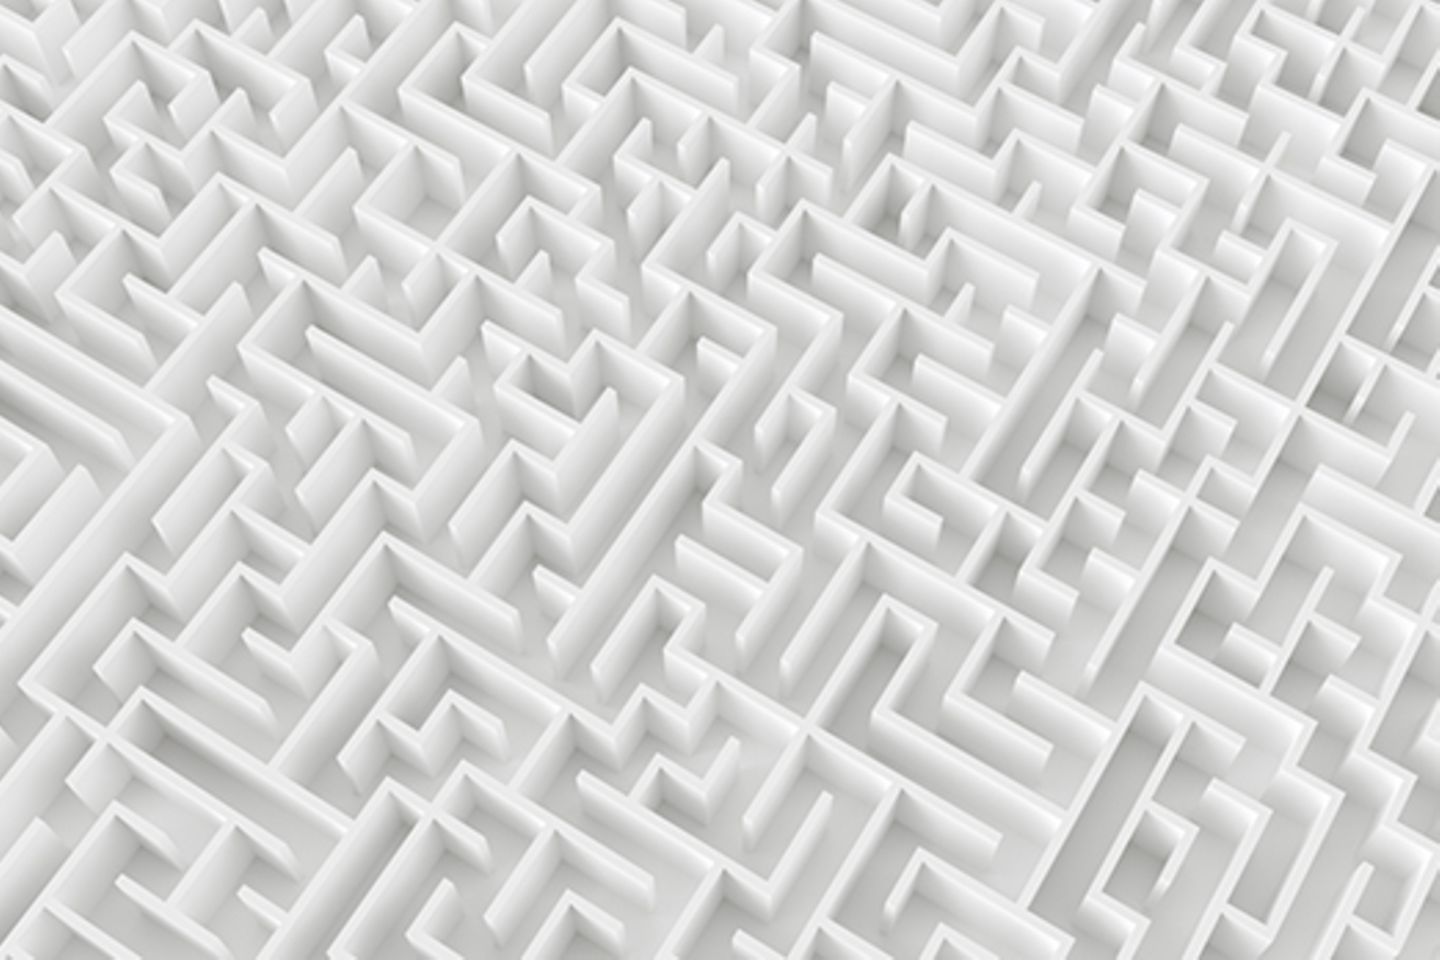 Bird's eye view of white labyrinth.